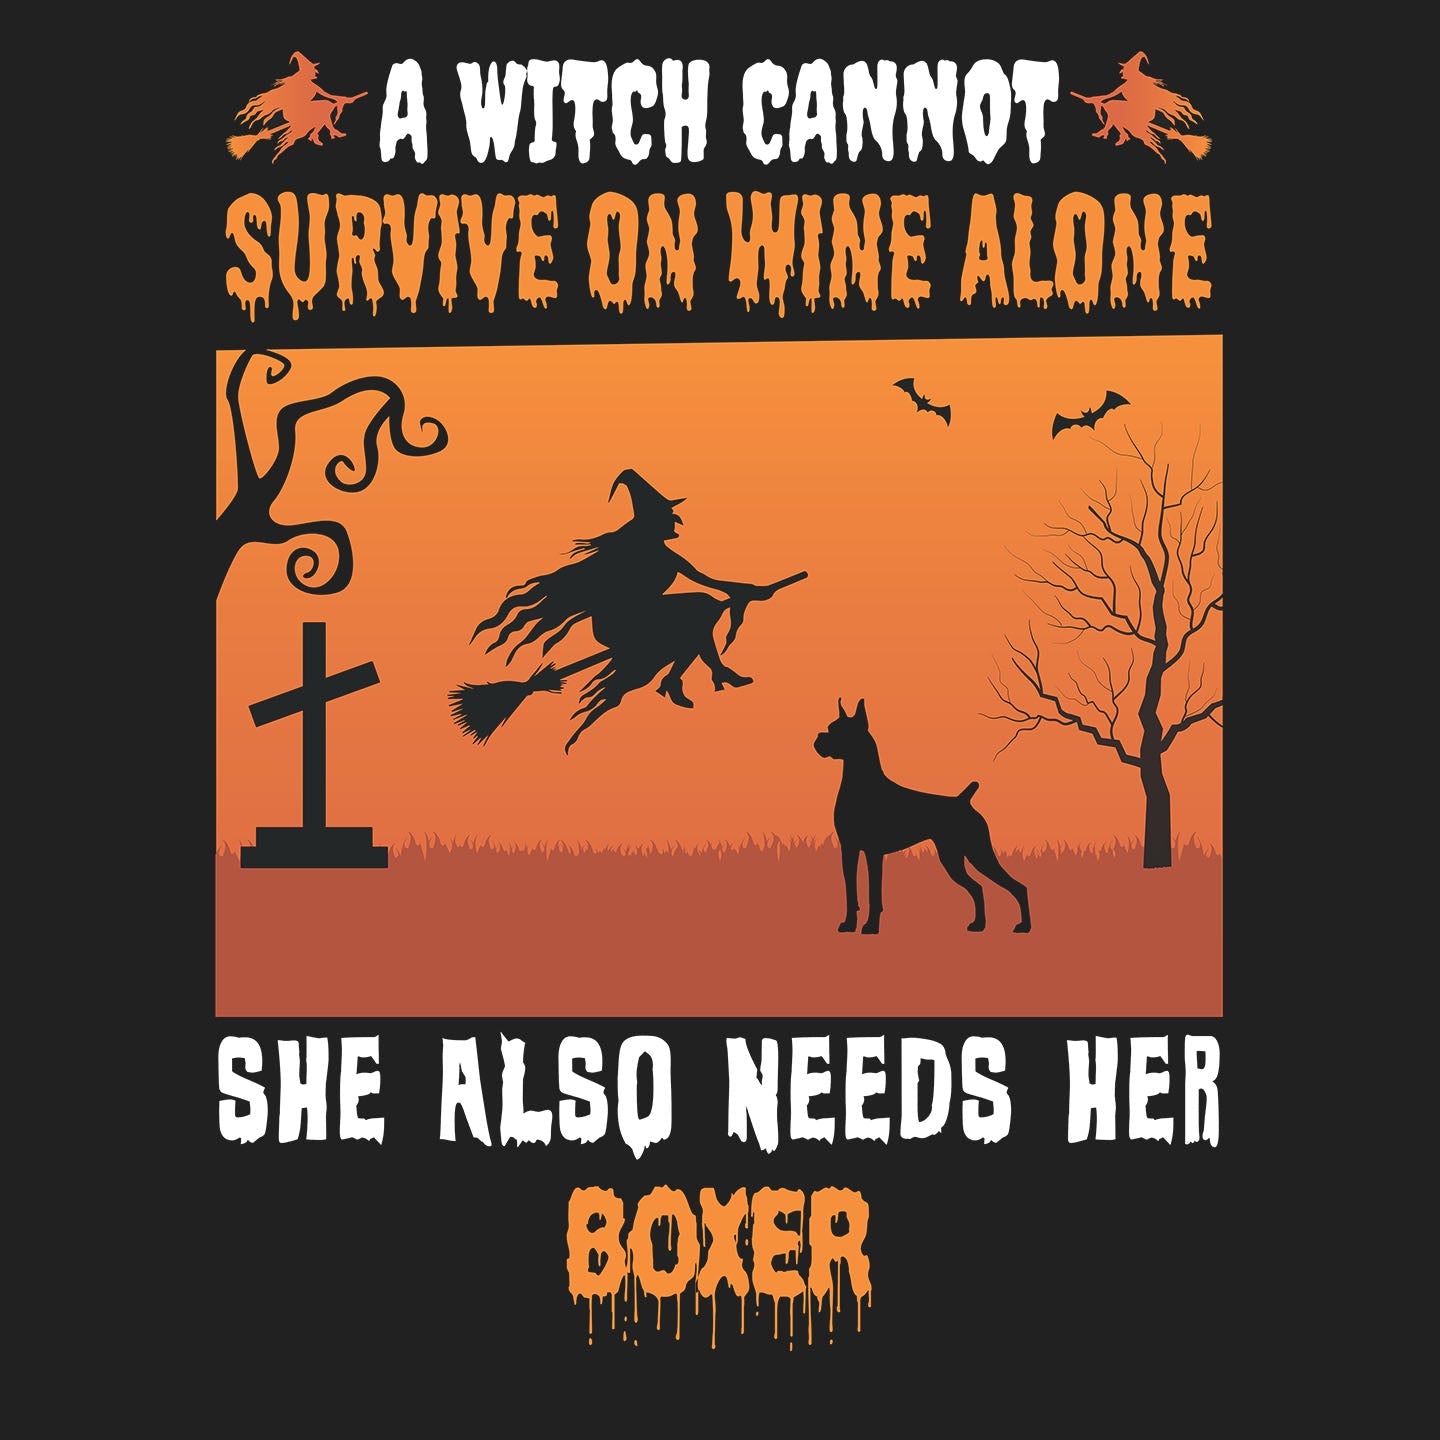 A Witch Needs Her Boxer - Adult Unisex Crewneck Sweatshirt